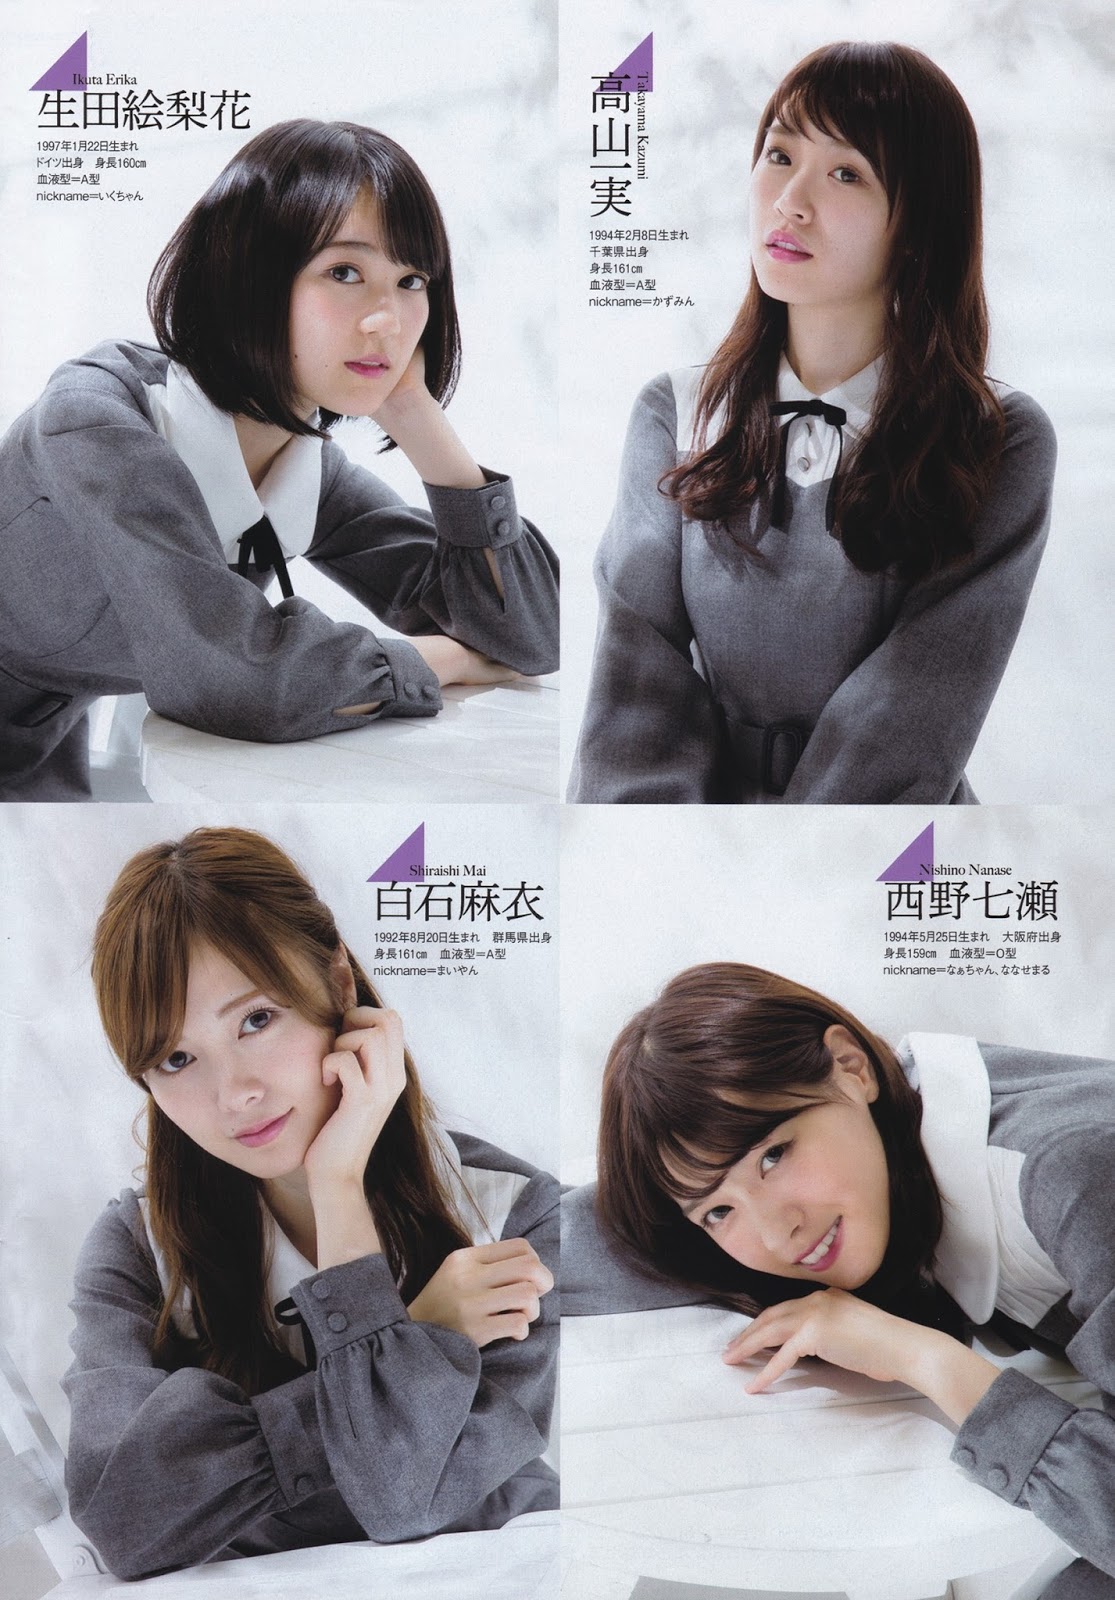 Nao Kanzaki and a few friends: Nogizaka46: 2016 Magazine scans #76 